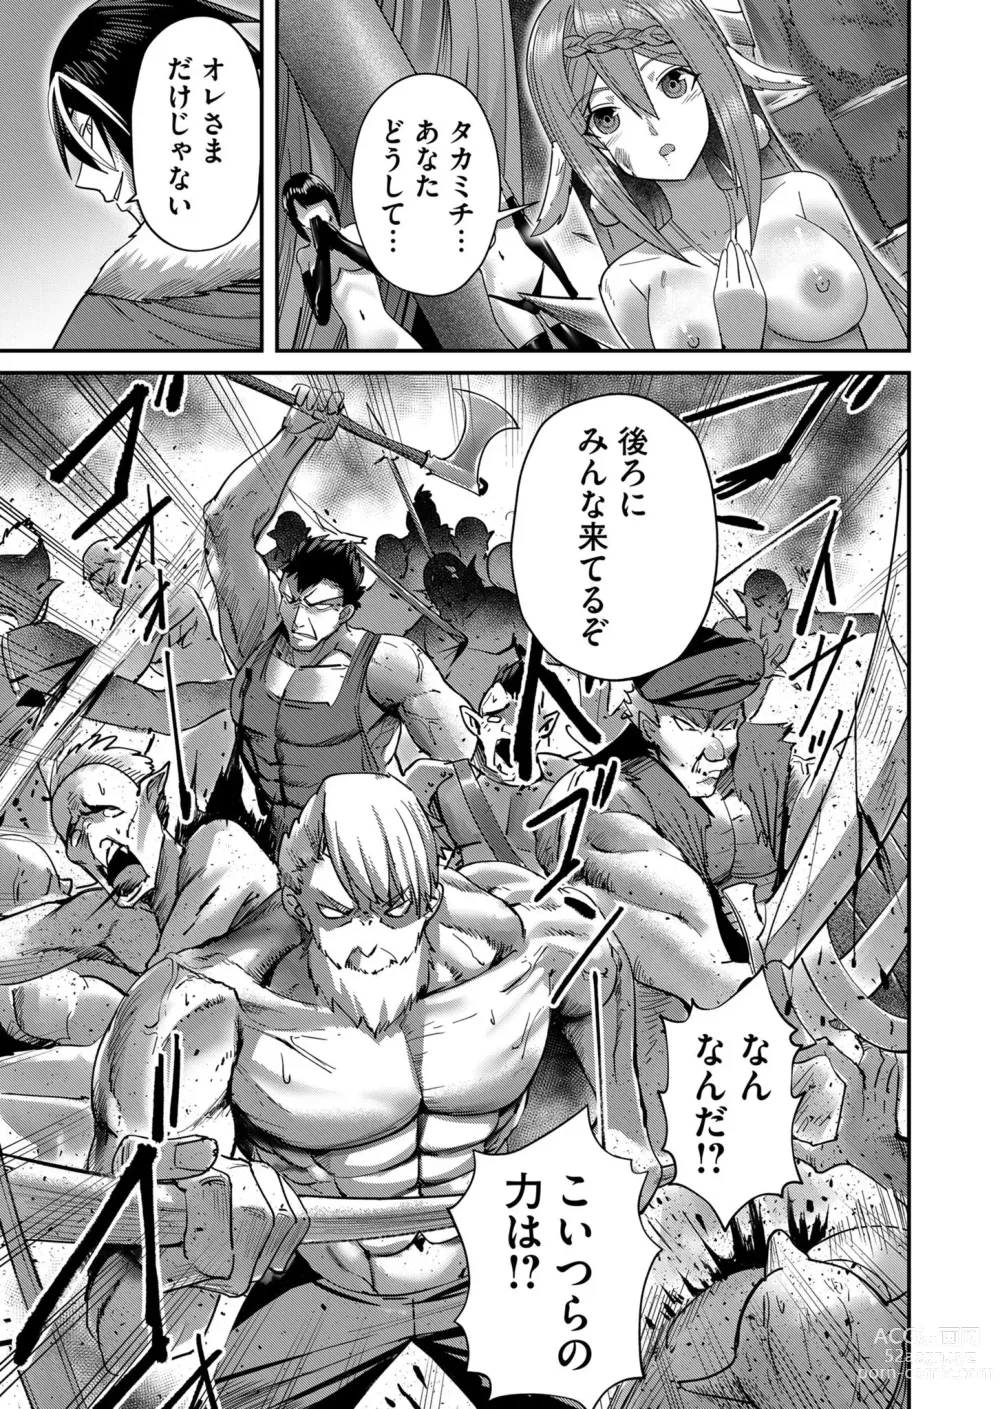 Page 185 of manga Kichiku Eiyuu Vol.01